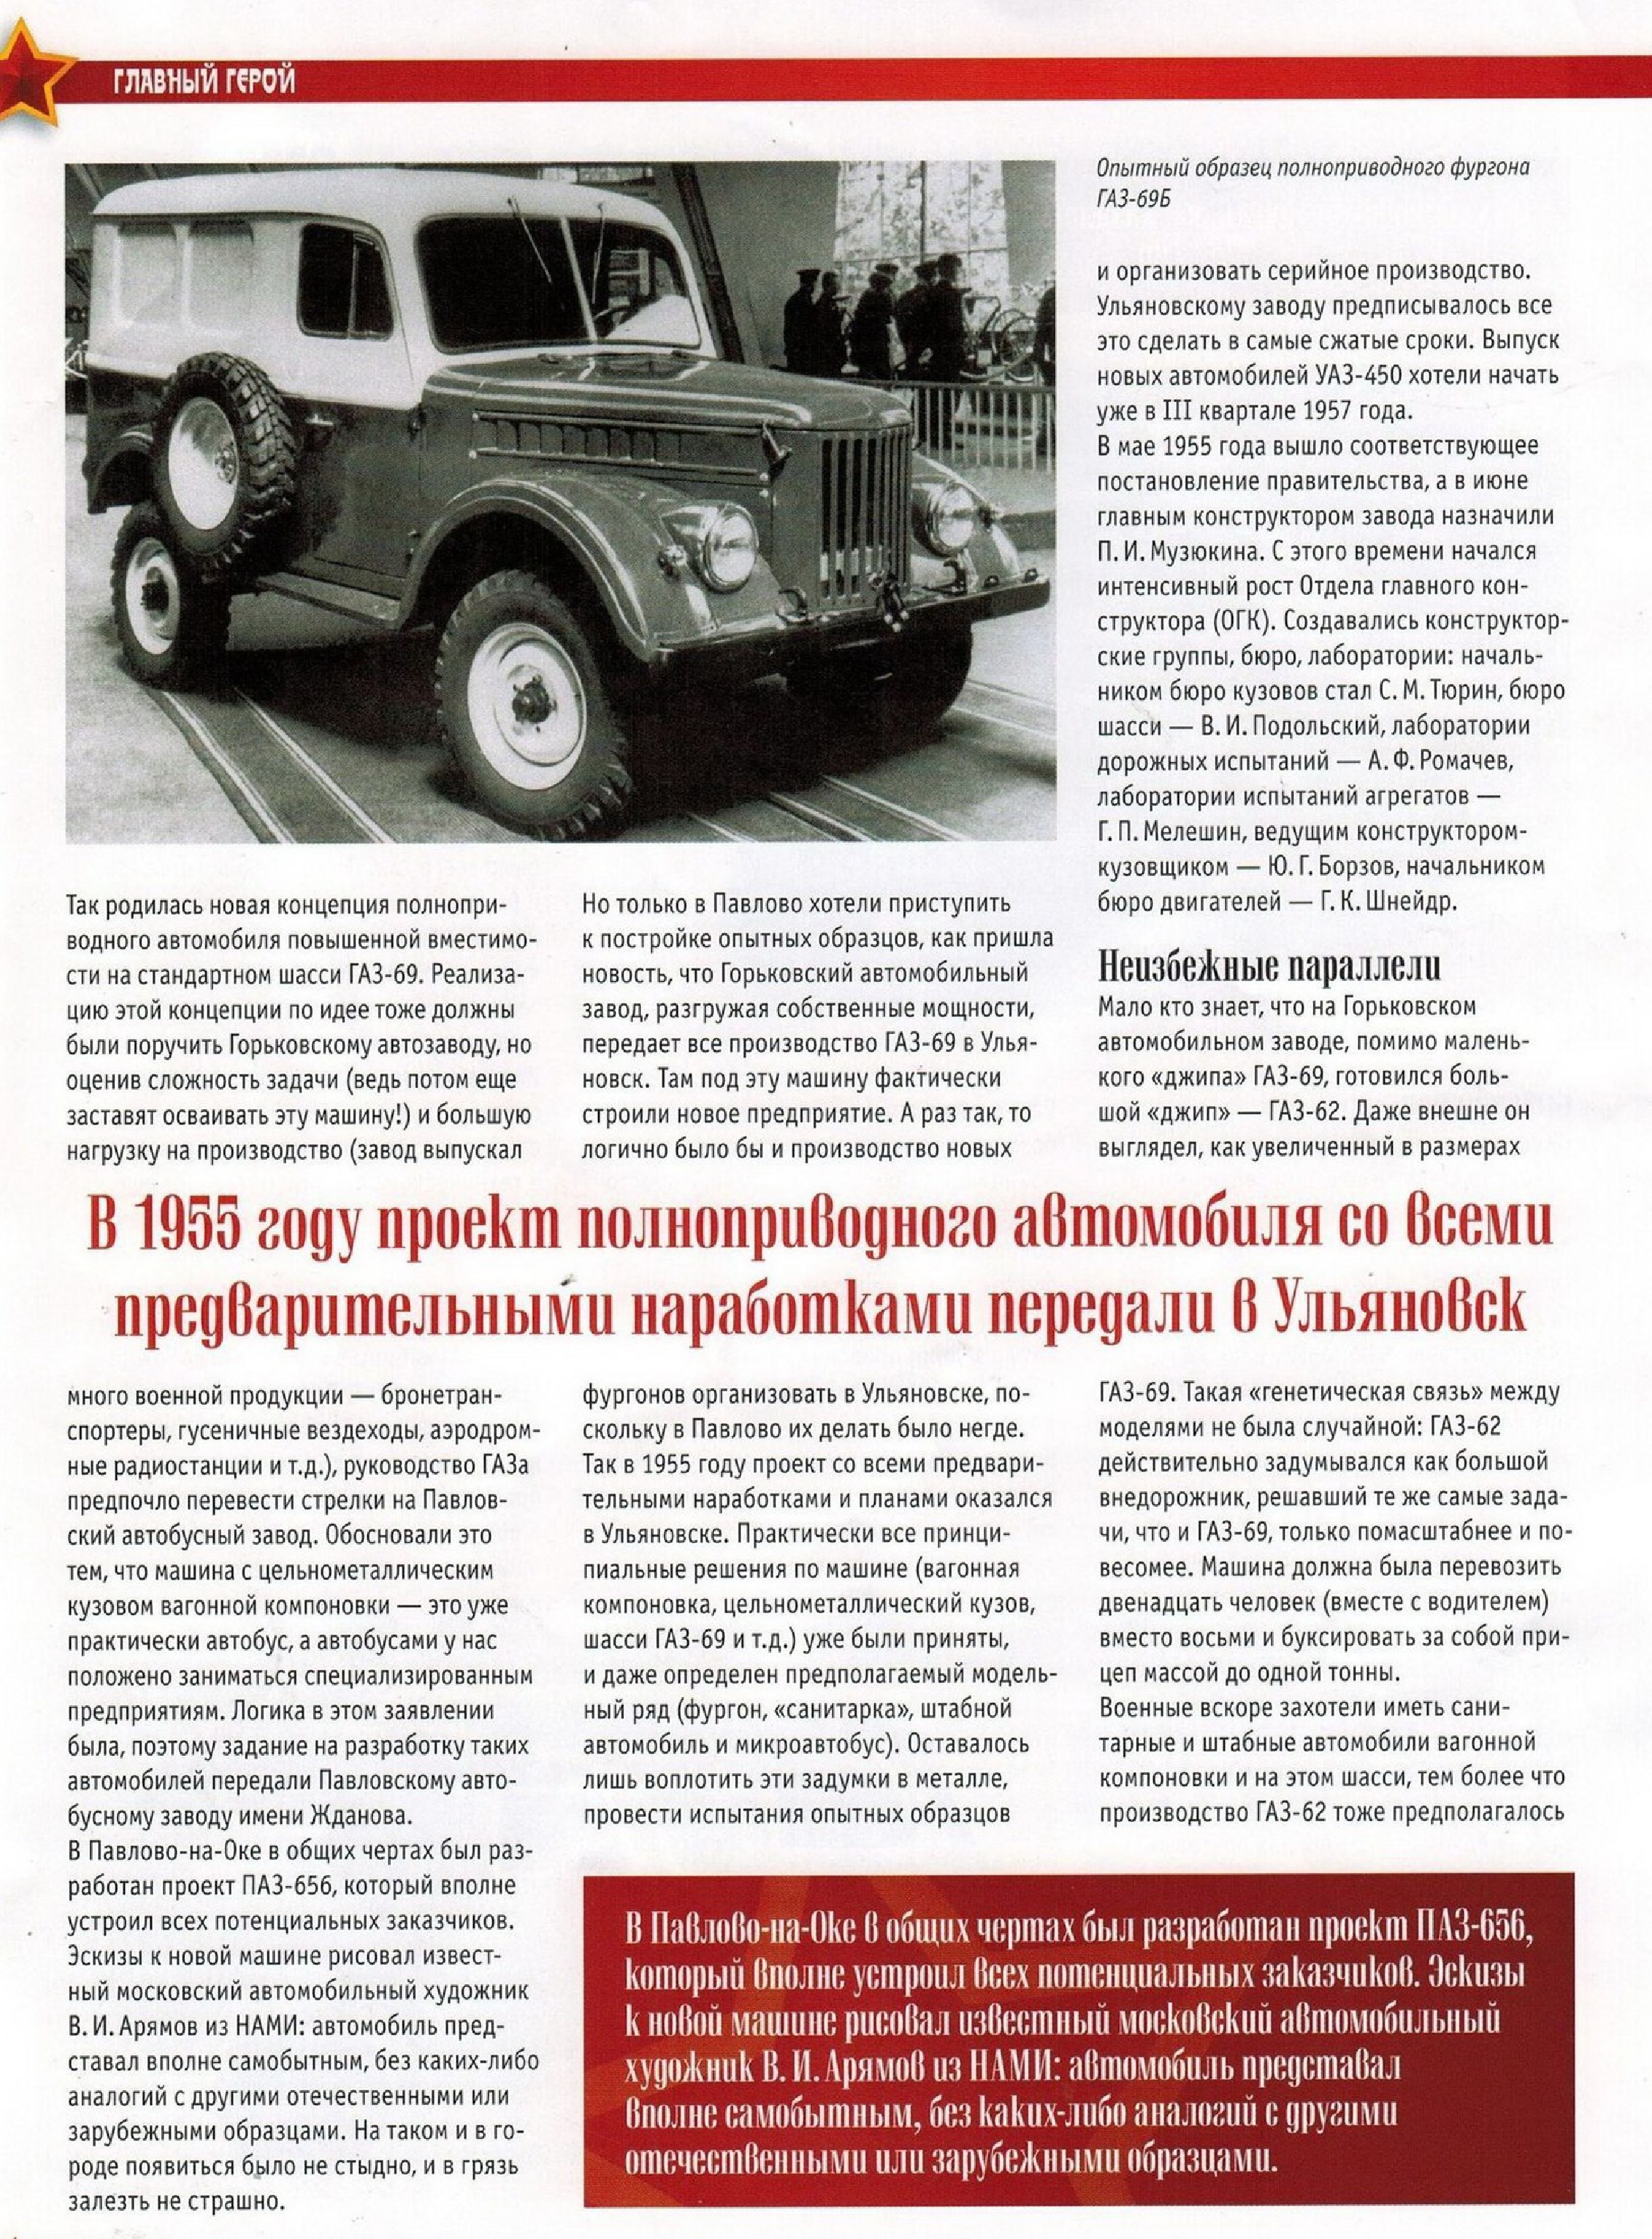 Automobile legend CCCP 191 UAZ 450.pdf